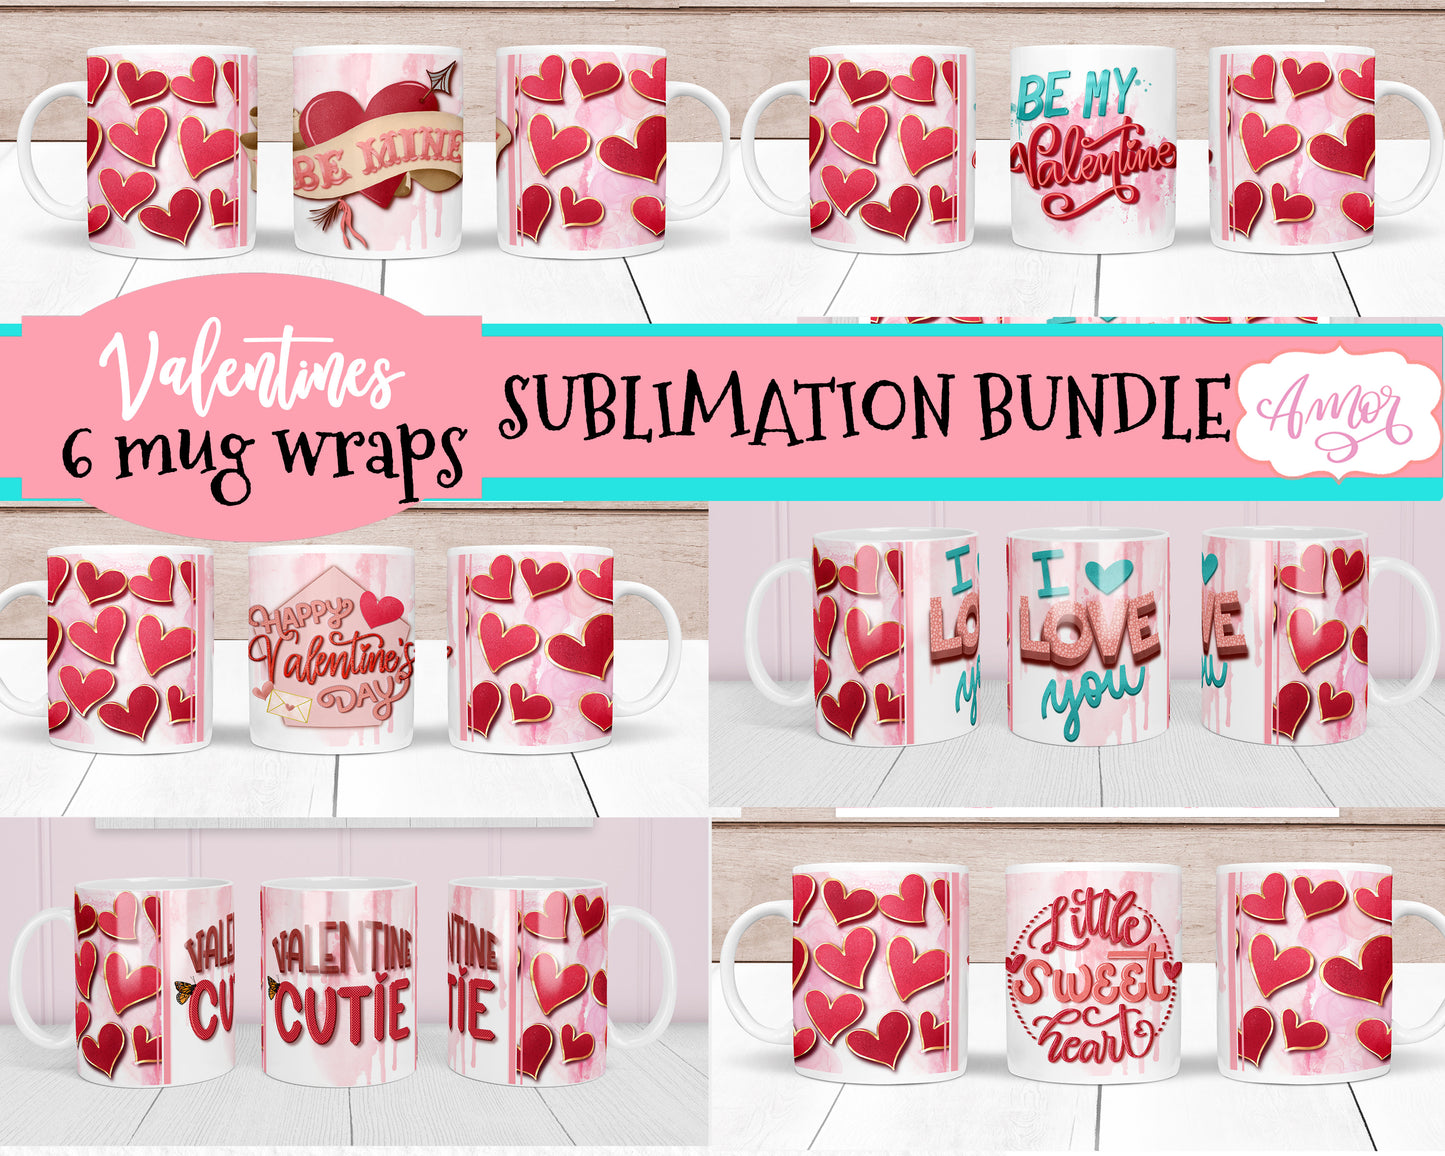 Valentines Mug Wraps for Sublimation Bundle